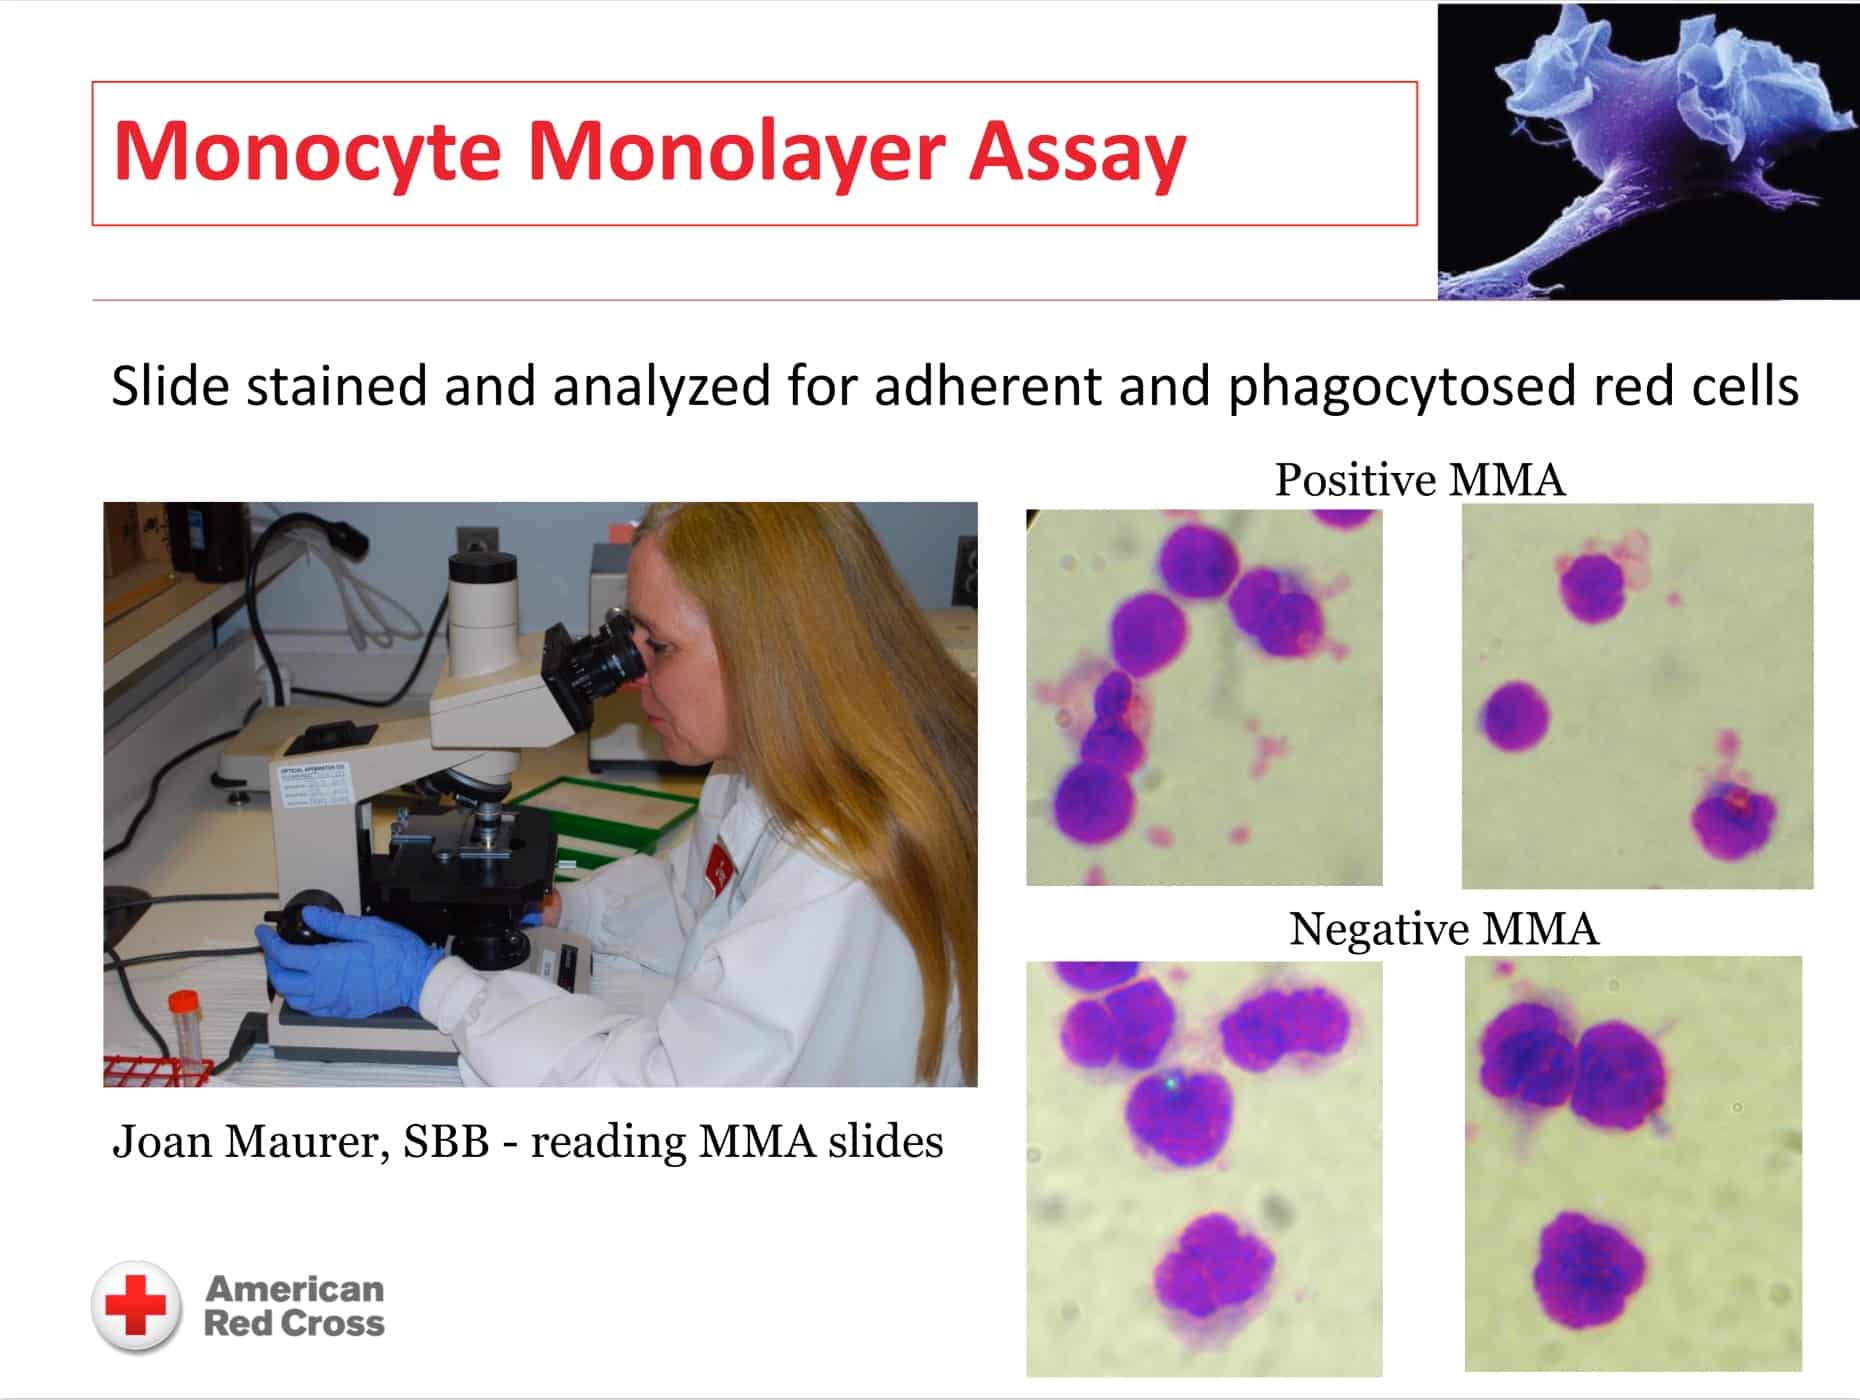 Monocyte monolayer assay image 5